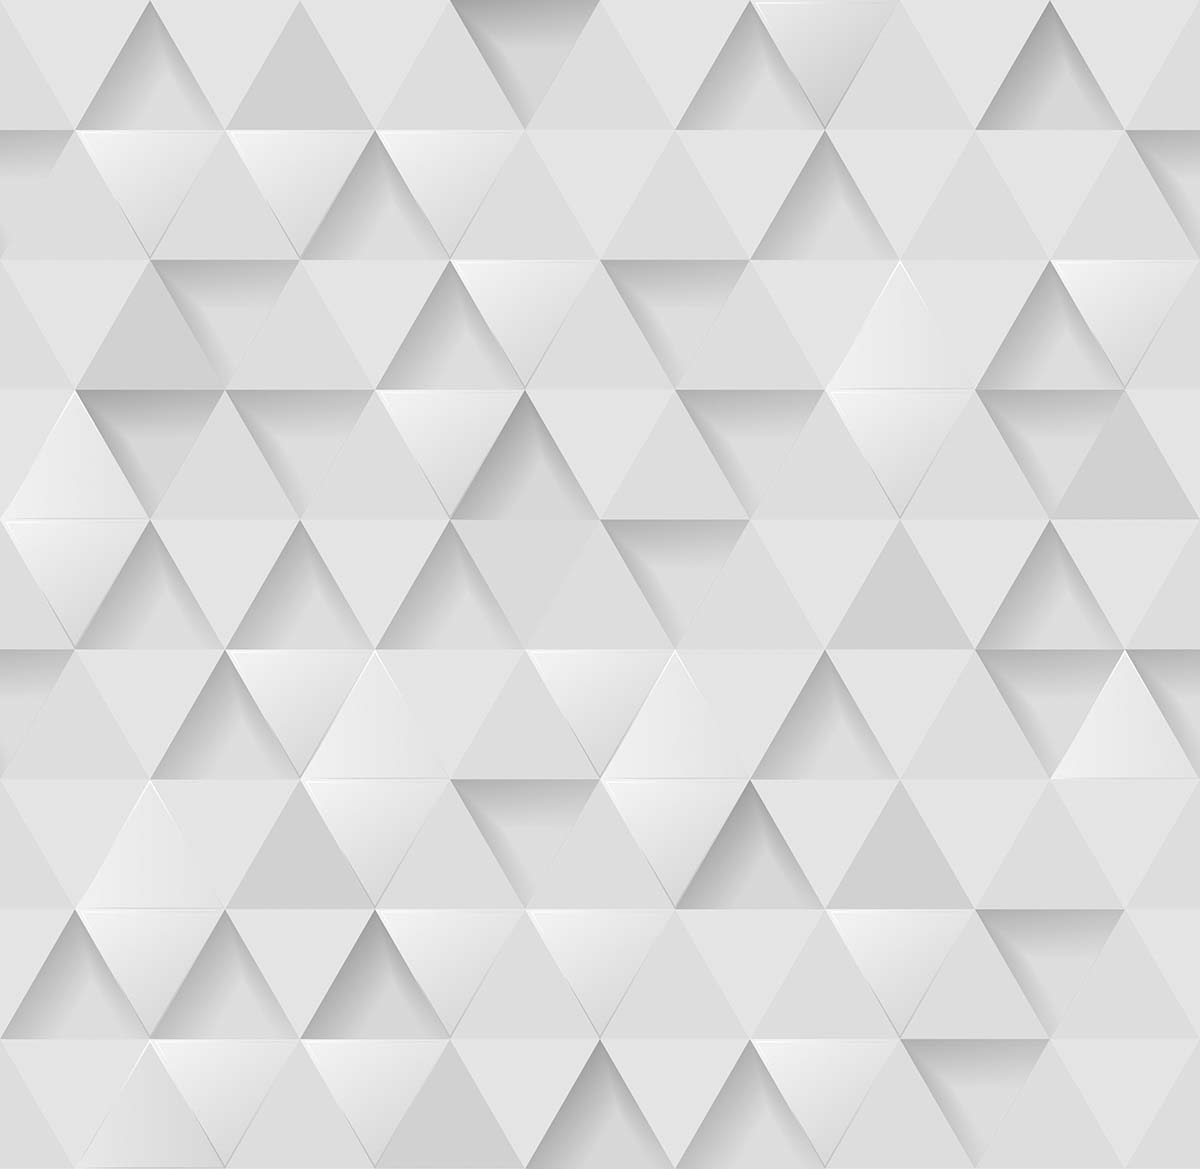 A white triangle pattern